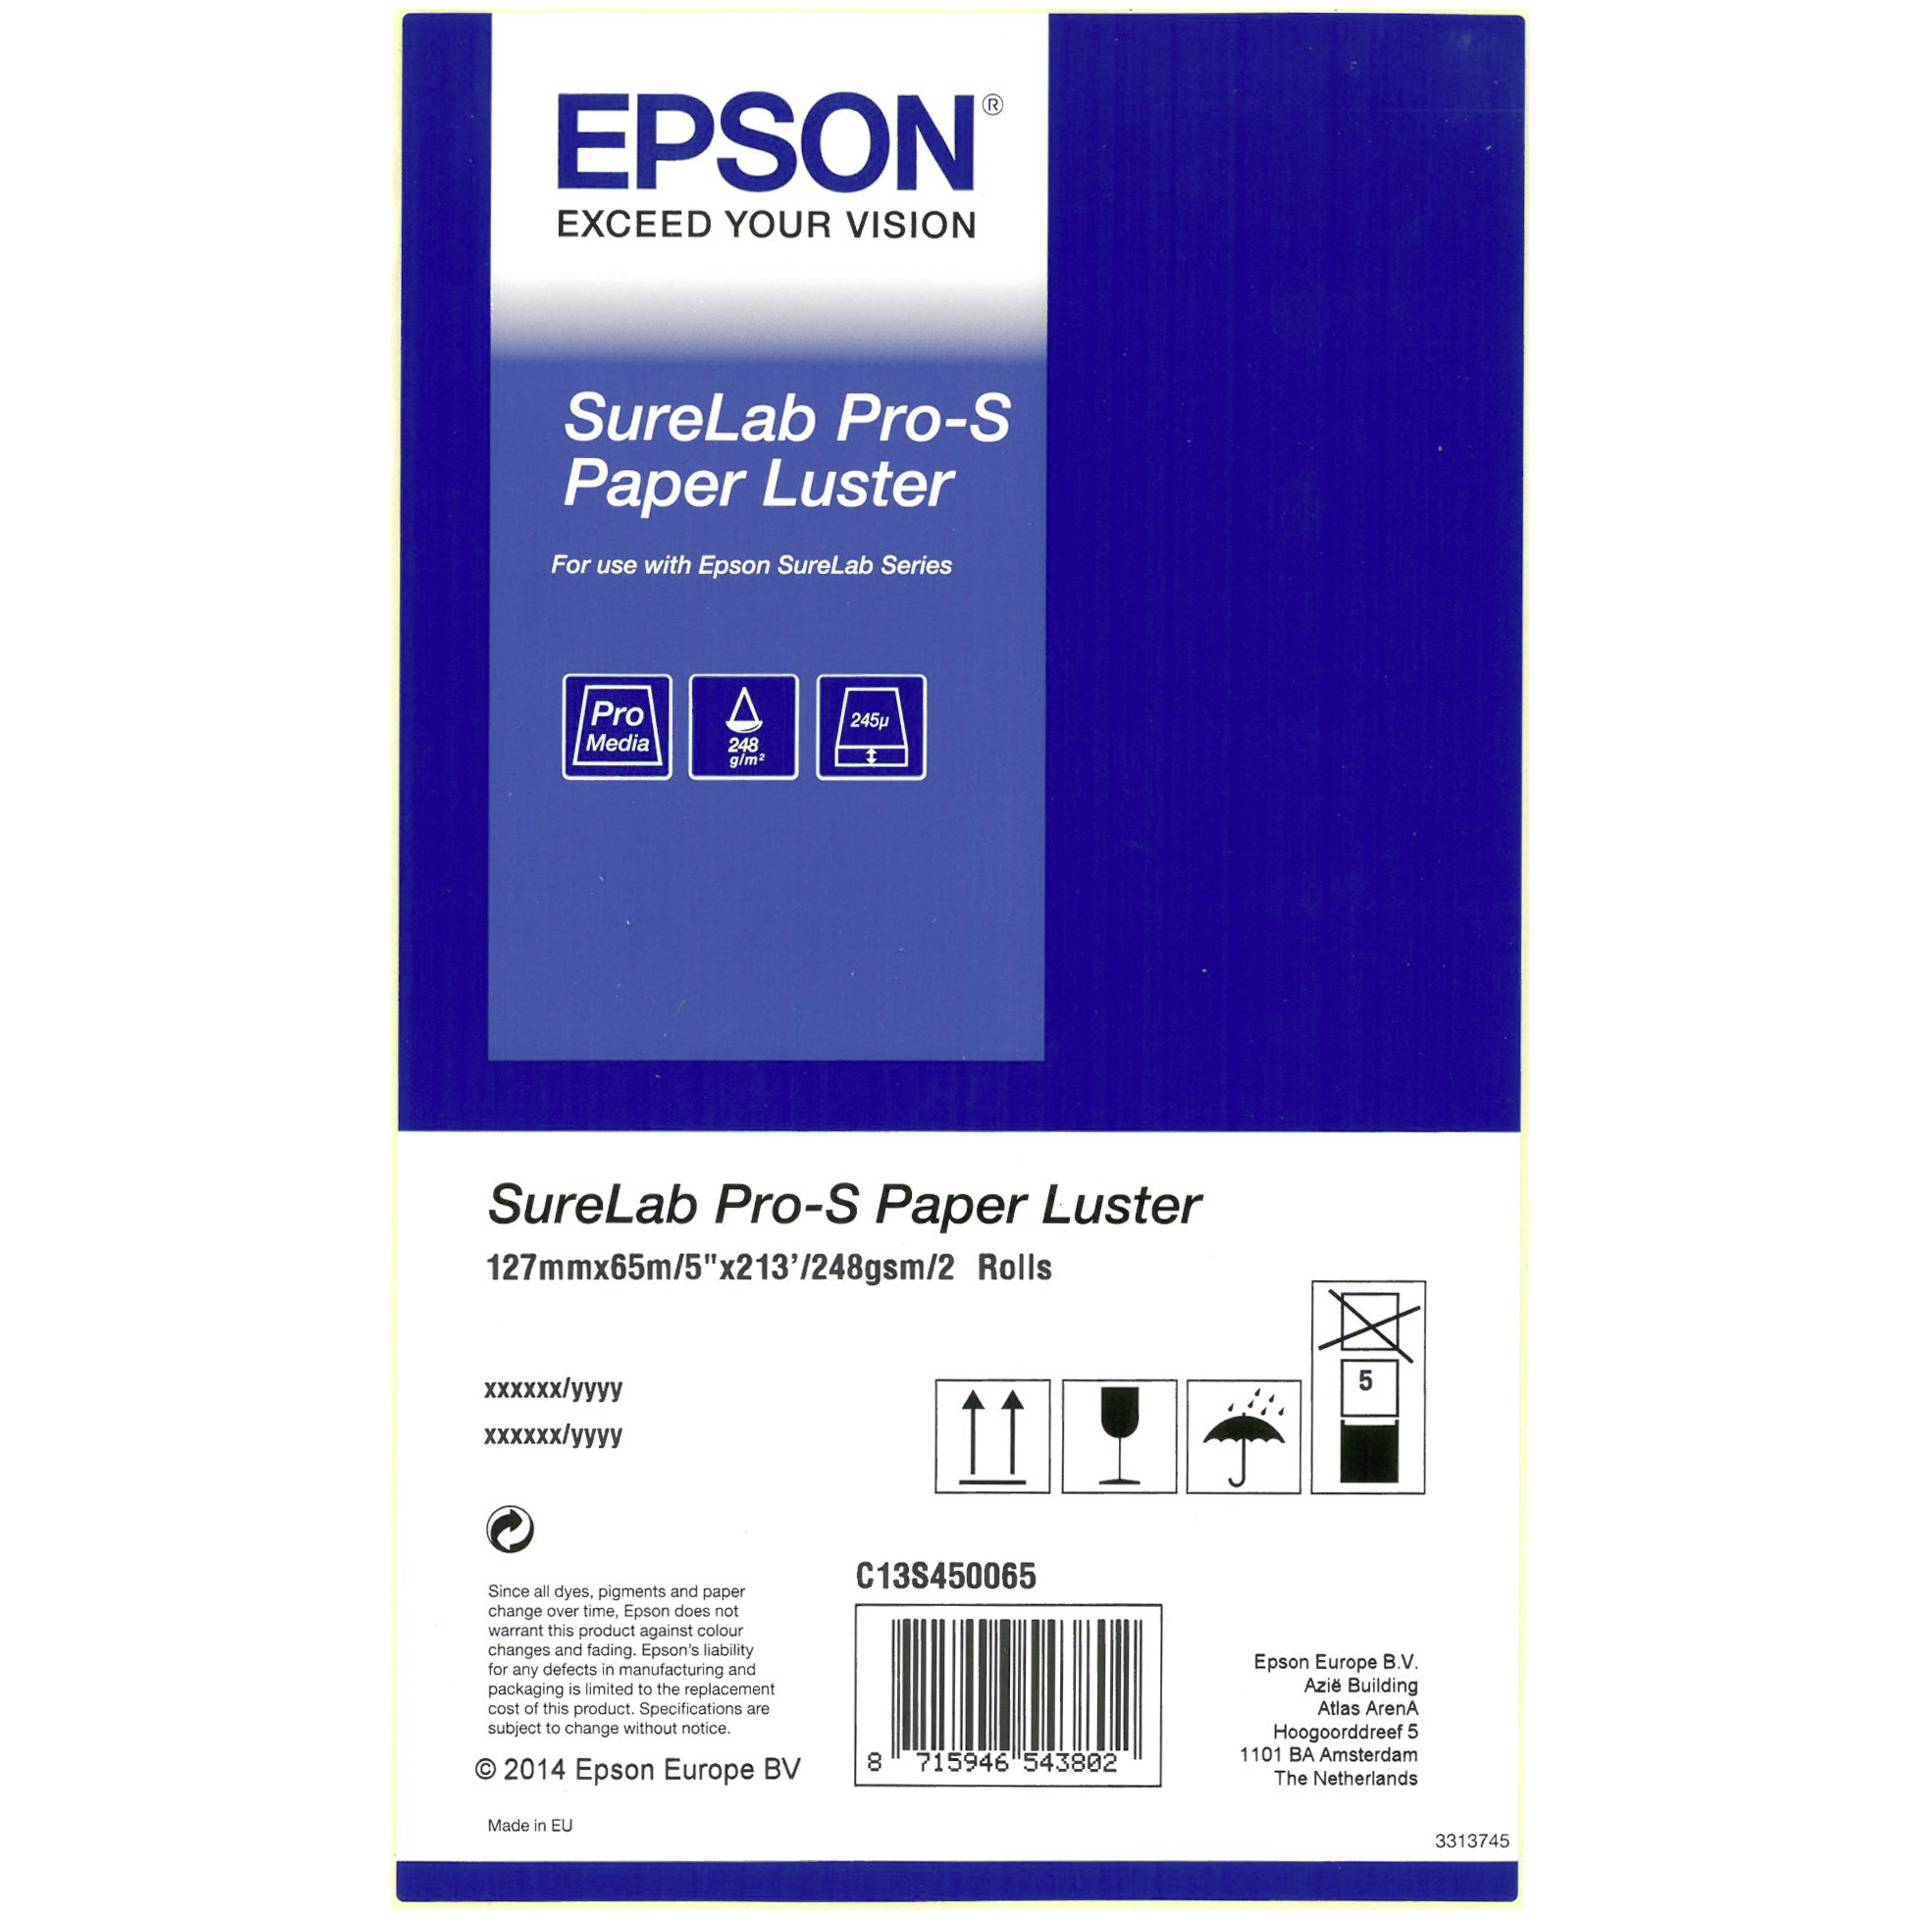 1x2 Epson SureLab Pro-S carta BP lucida 127 mm x 65 m 254 g